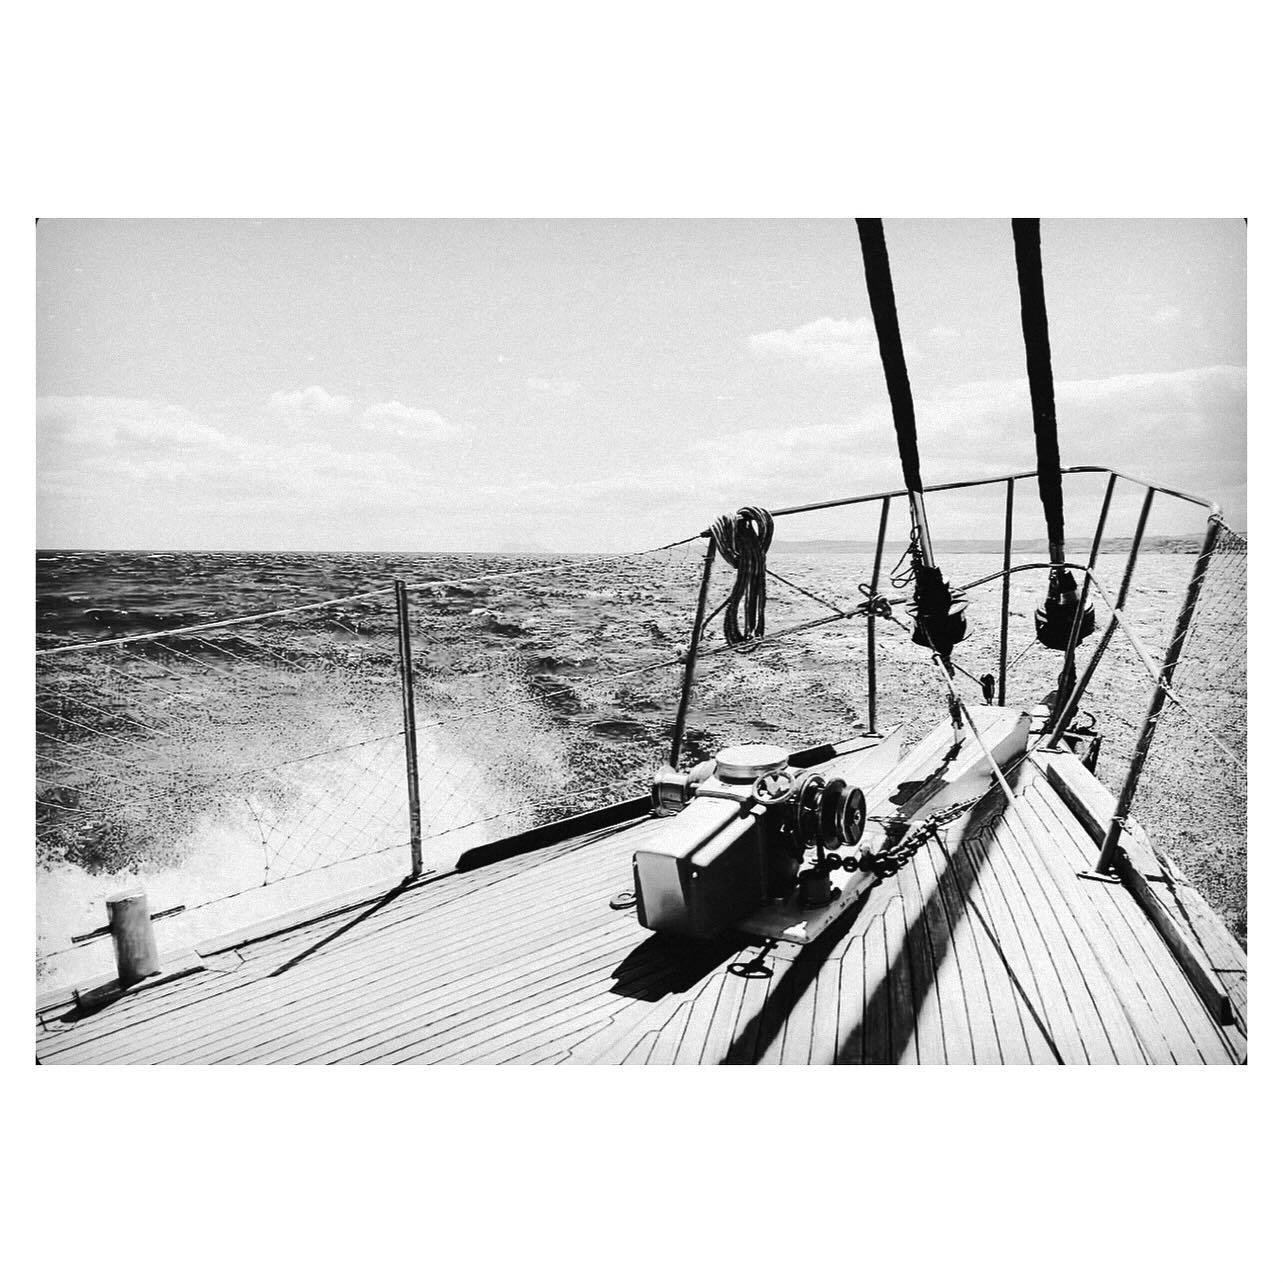 Ocean breeze 🤍 Part 1
.
.
.
#marbella #spain #travel #travelphotography #instatravel #insta #instagood #instamood #instaphoto #photooftheday #naturephotography #landscapephotography #landscape #photographer #print #ocean #oceanlife #sea #salty #sail